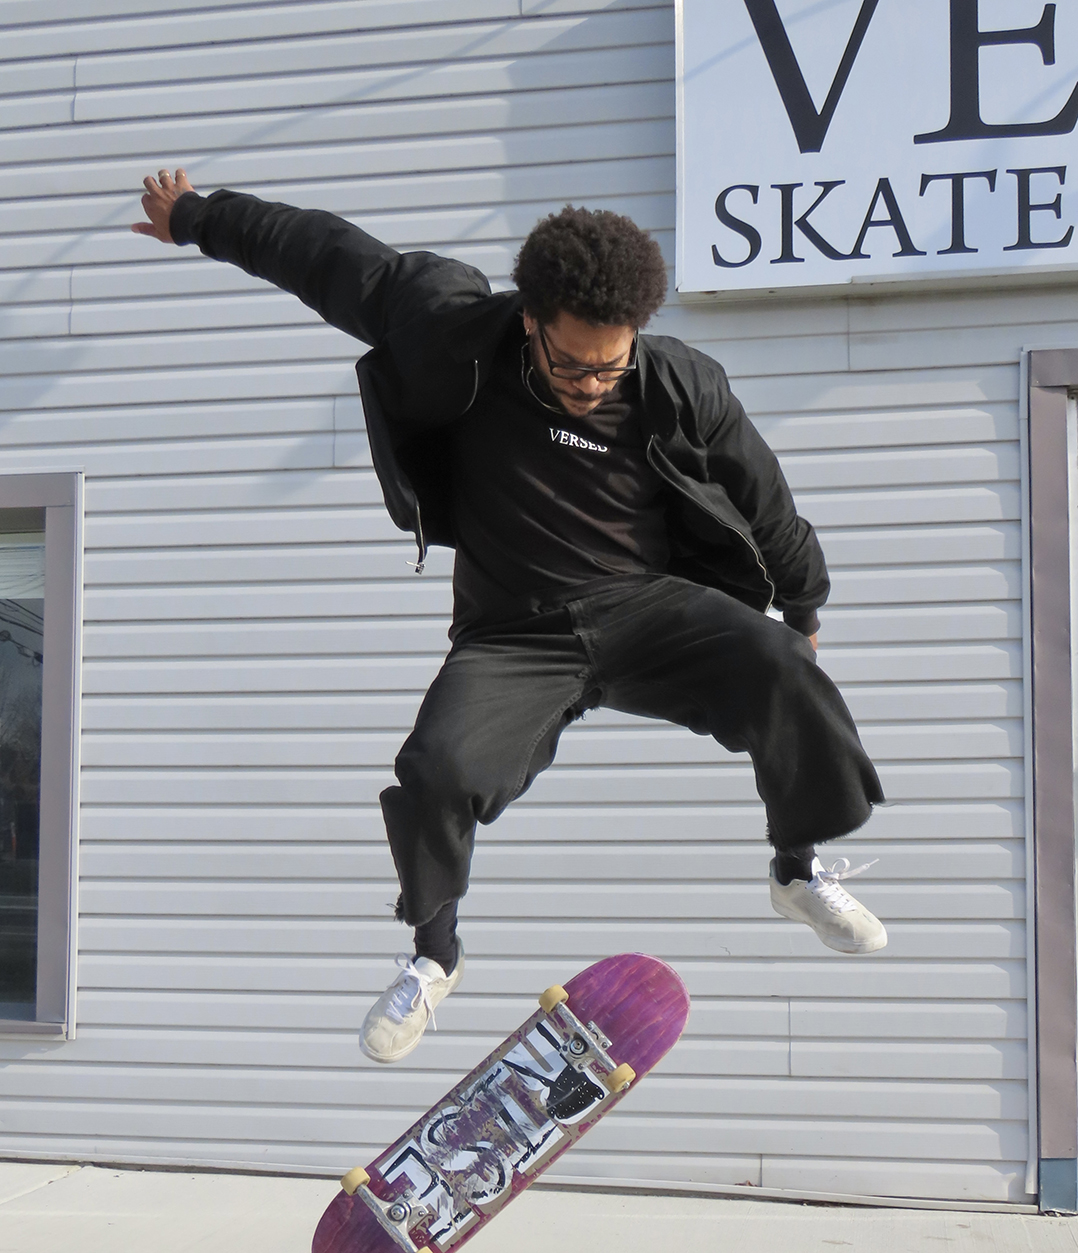 Skate of mind: Versed Skateboard Shop aims to create community, highlight skills